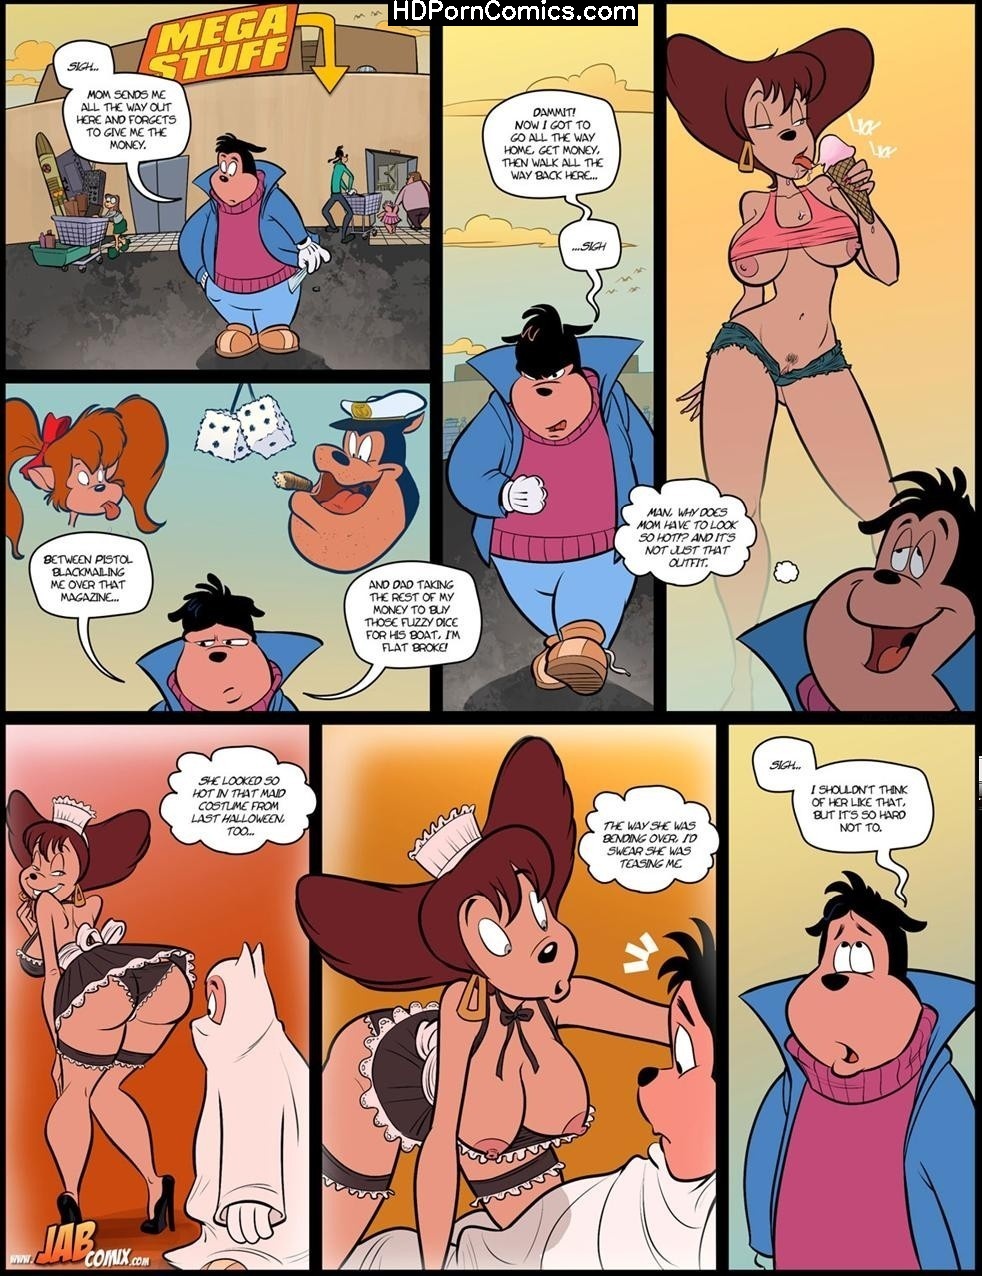 Universal Cartoon Porn - Gallery - Cartoon Porn Comics